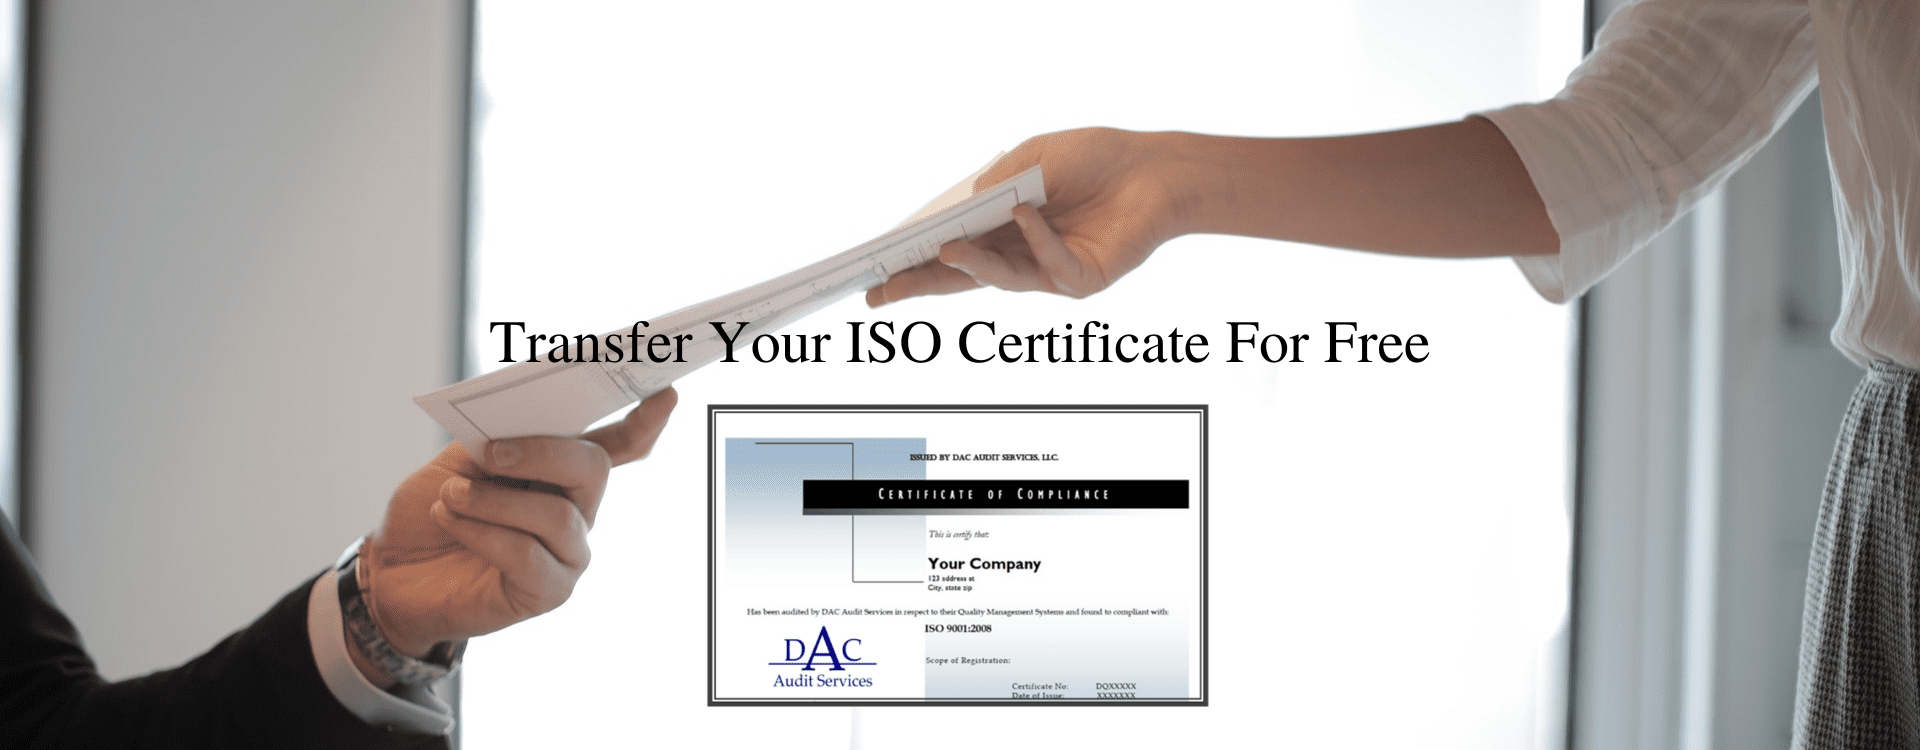 Free ISO Certificate Transfer